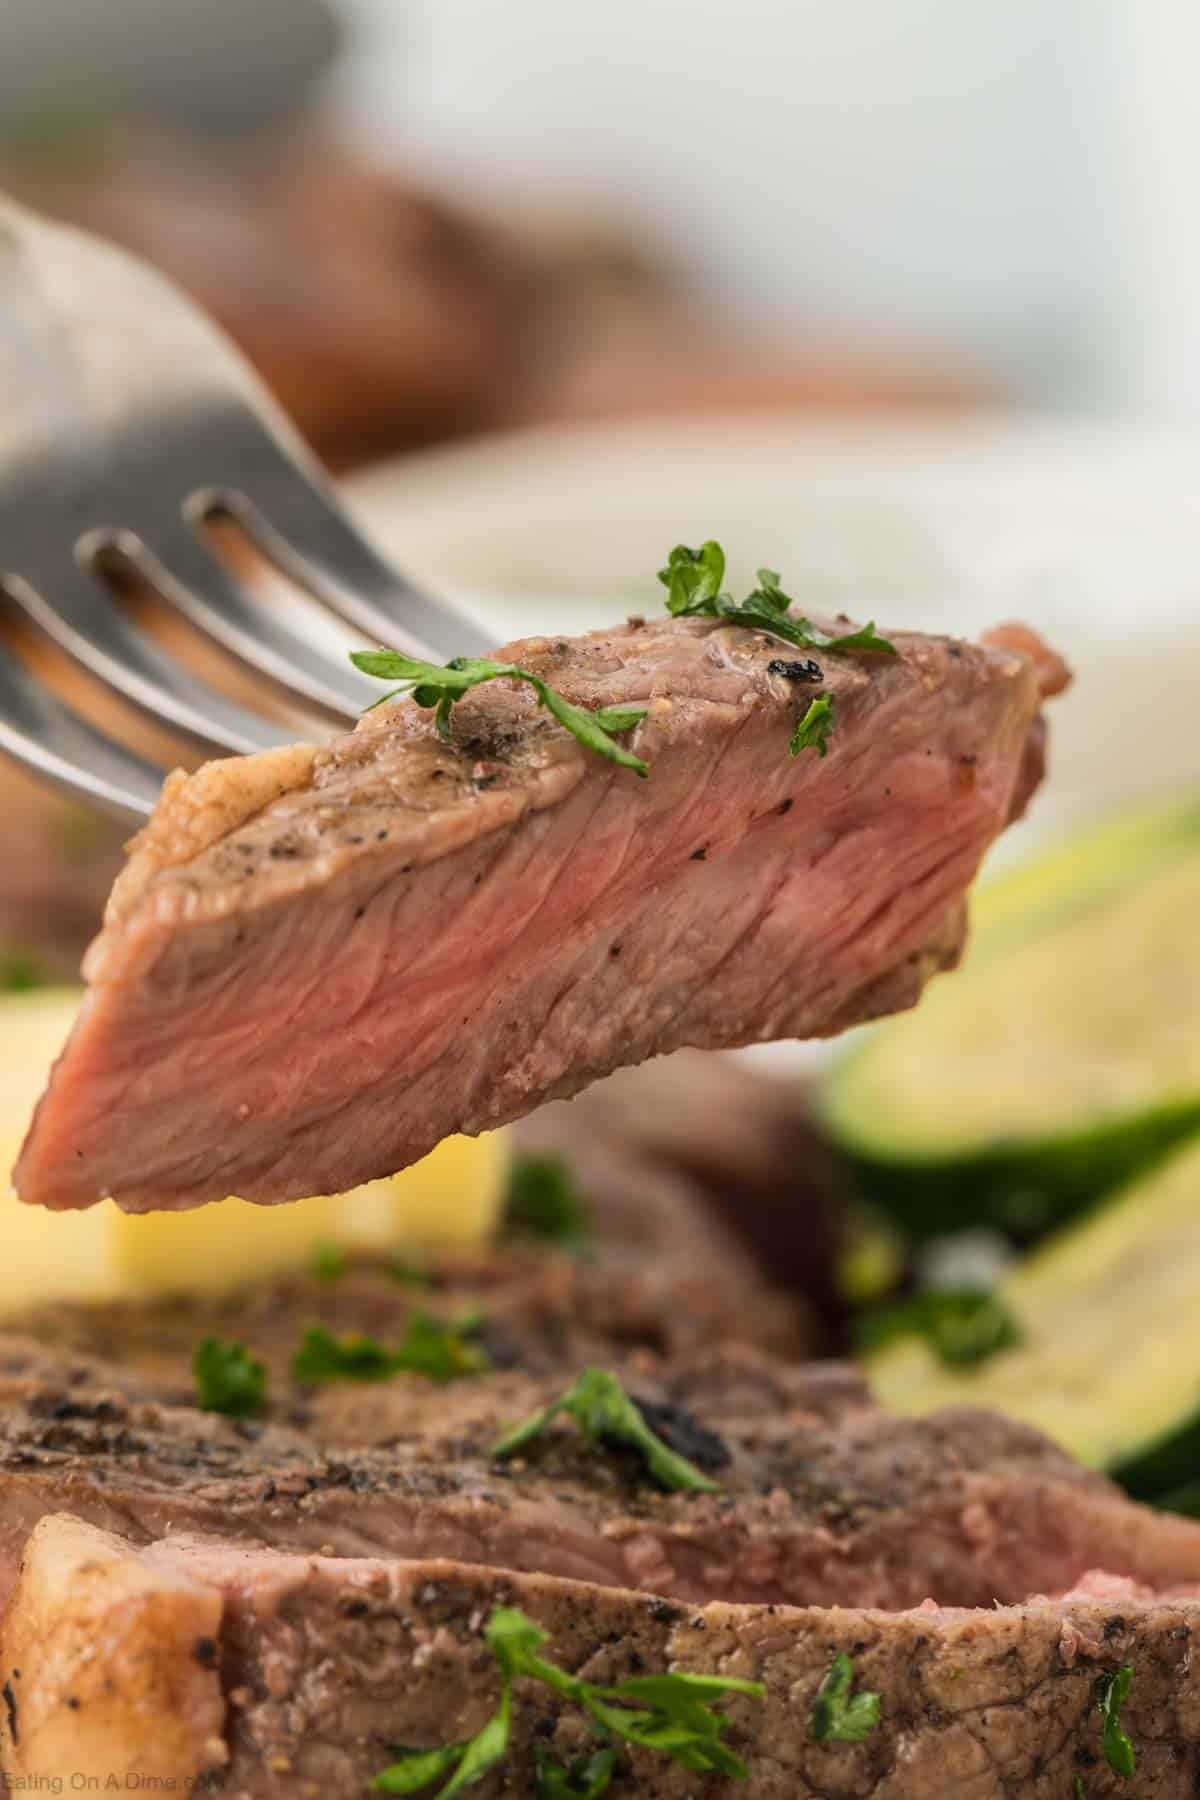 Close up image a bite of steak on a fork